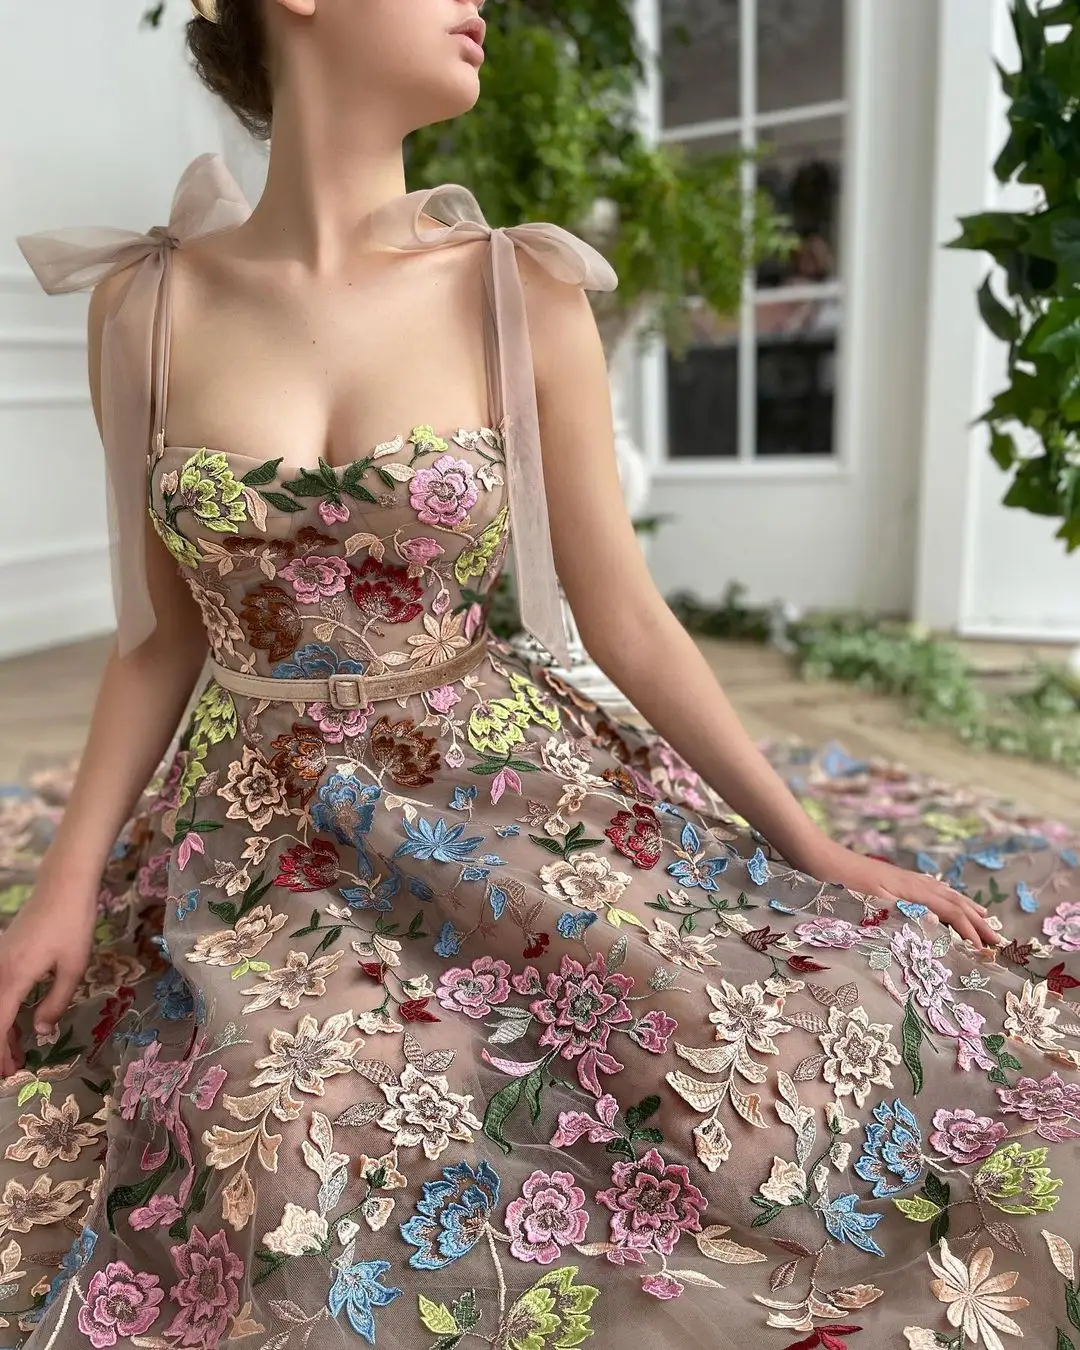 3D Applique Floral Haute Couture Blume Bestickt Phantasie Spitze Tüll Stoff